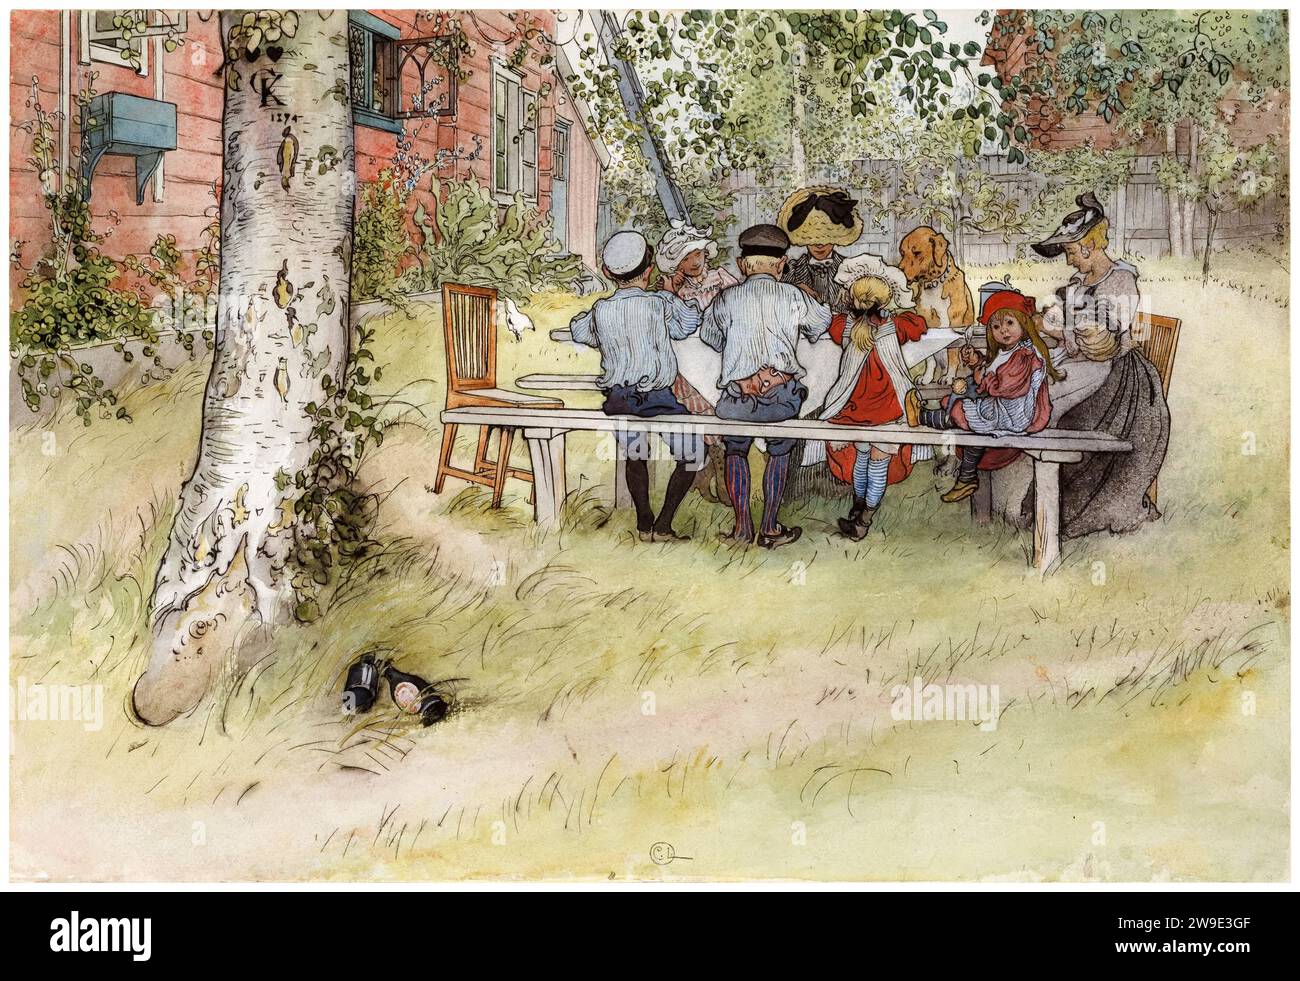 Carl Larsson, Breakfast Under the Big Birch, de la série : 'a Home' (26 aquarelles), aquarelle, 1894-1895 Banque D'Images